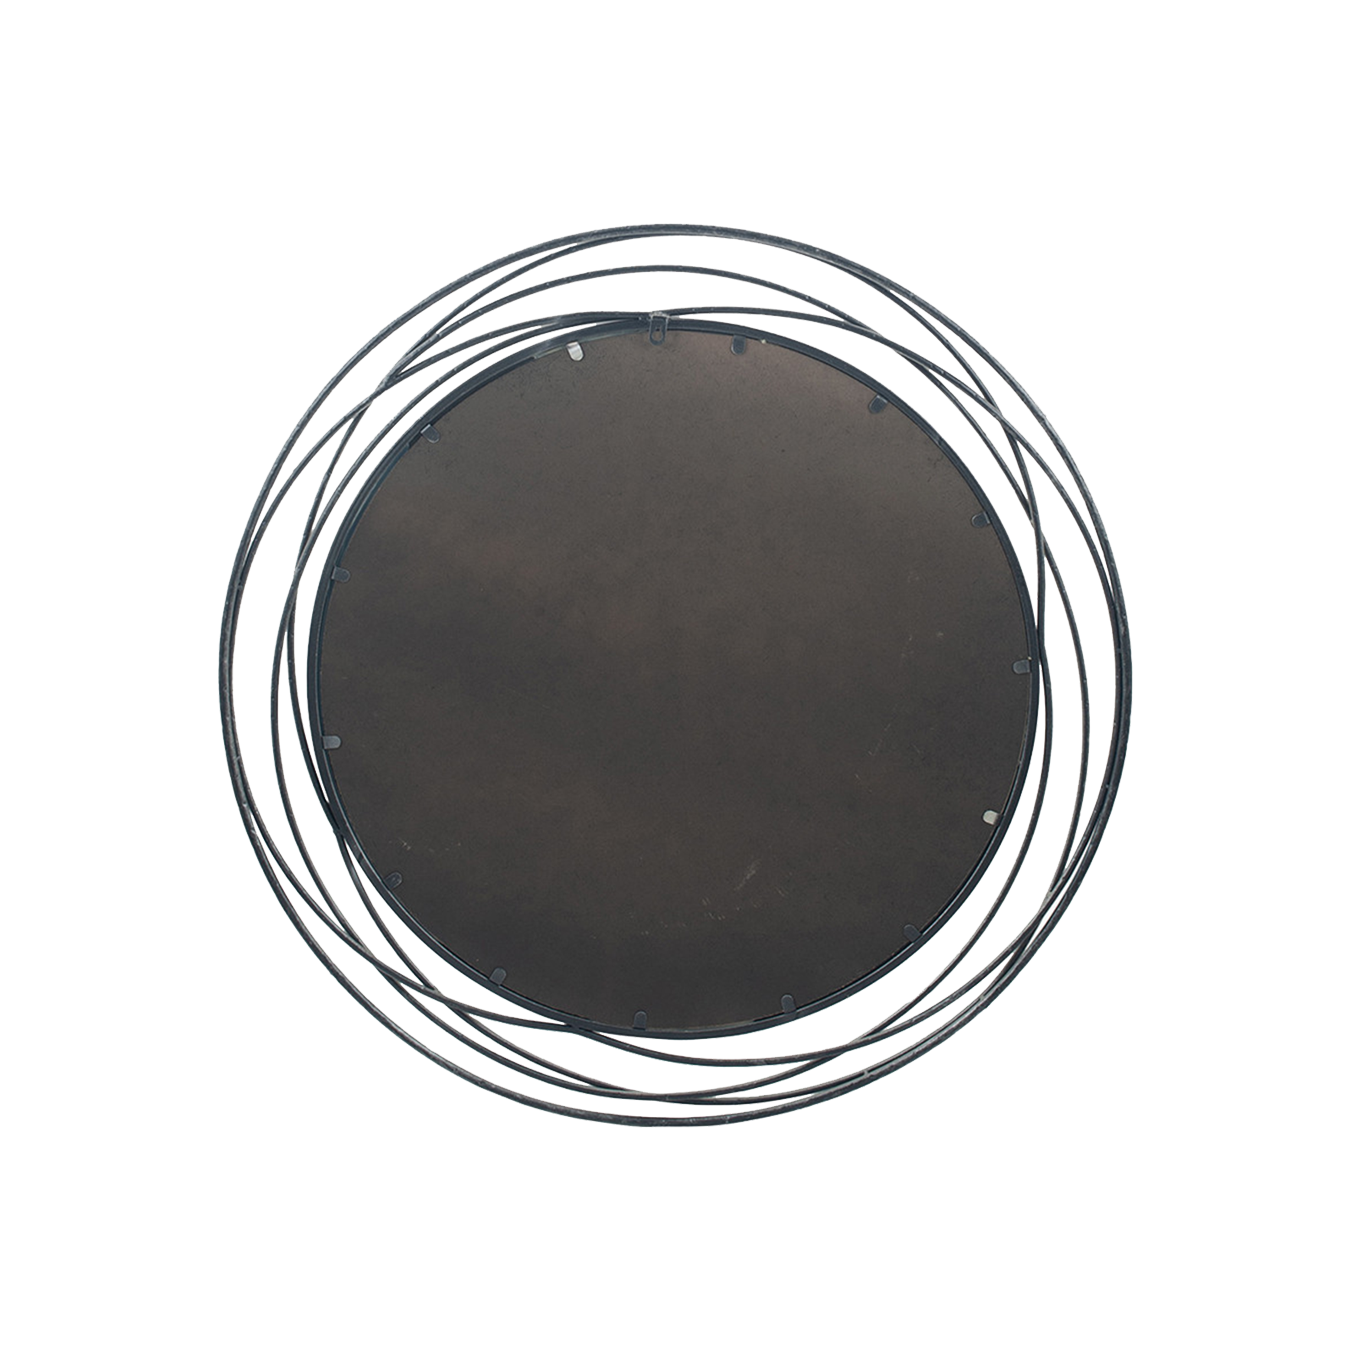 Antique Metal Round Wall Mirror